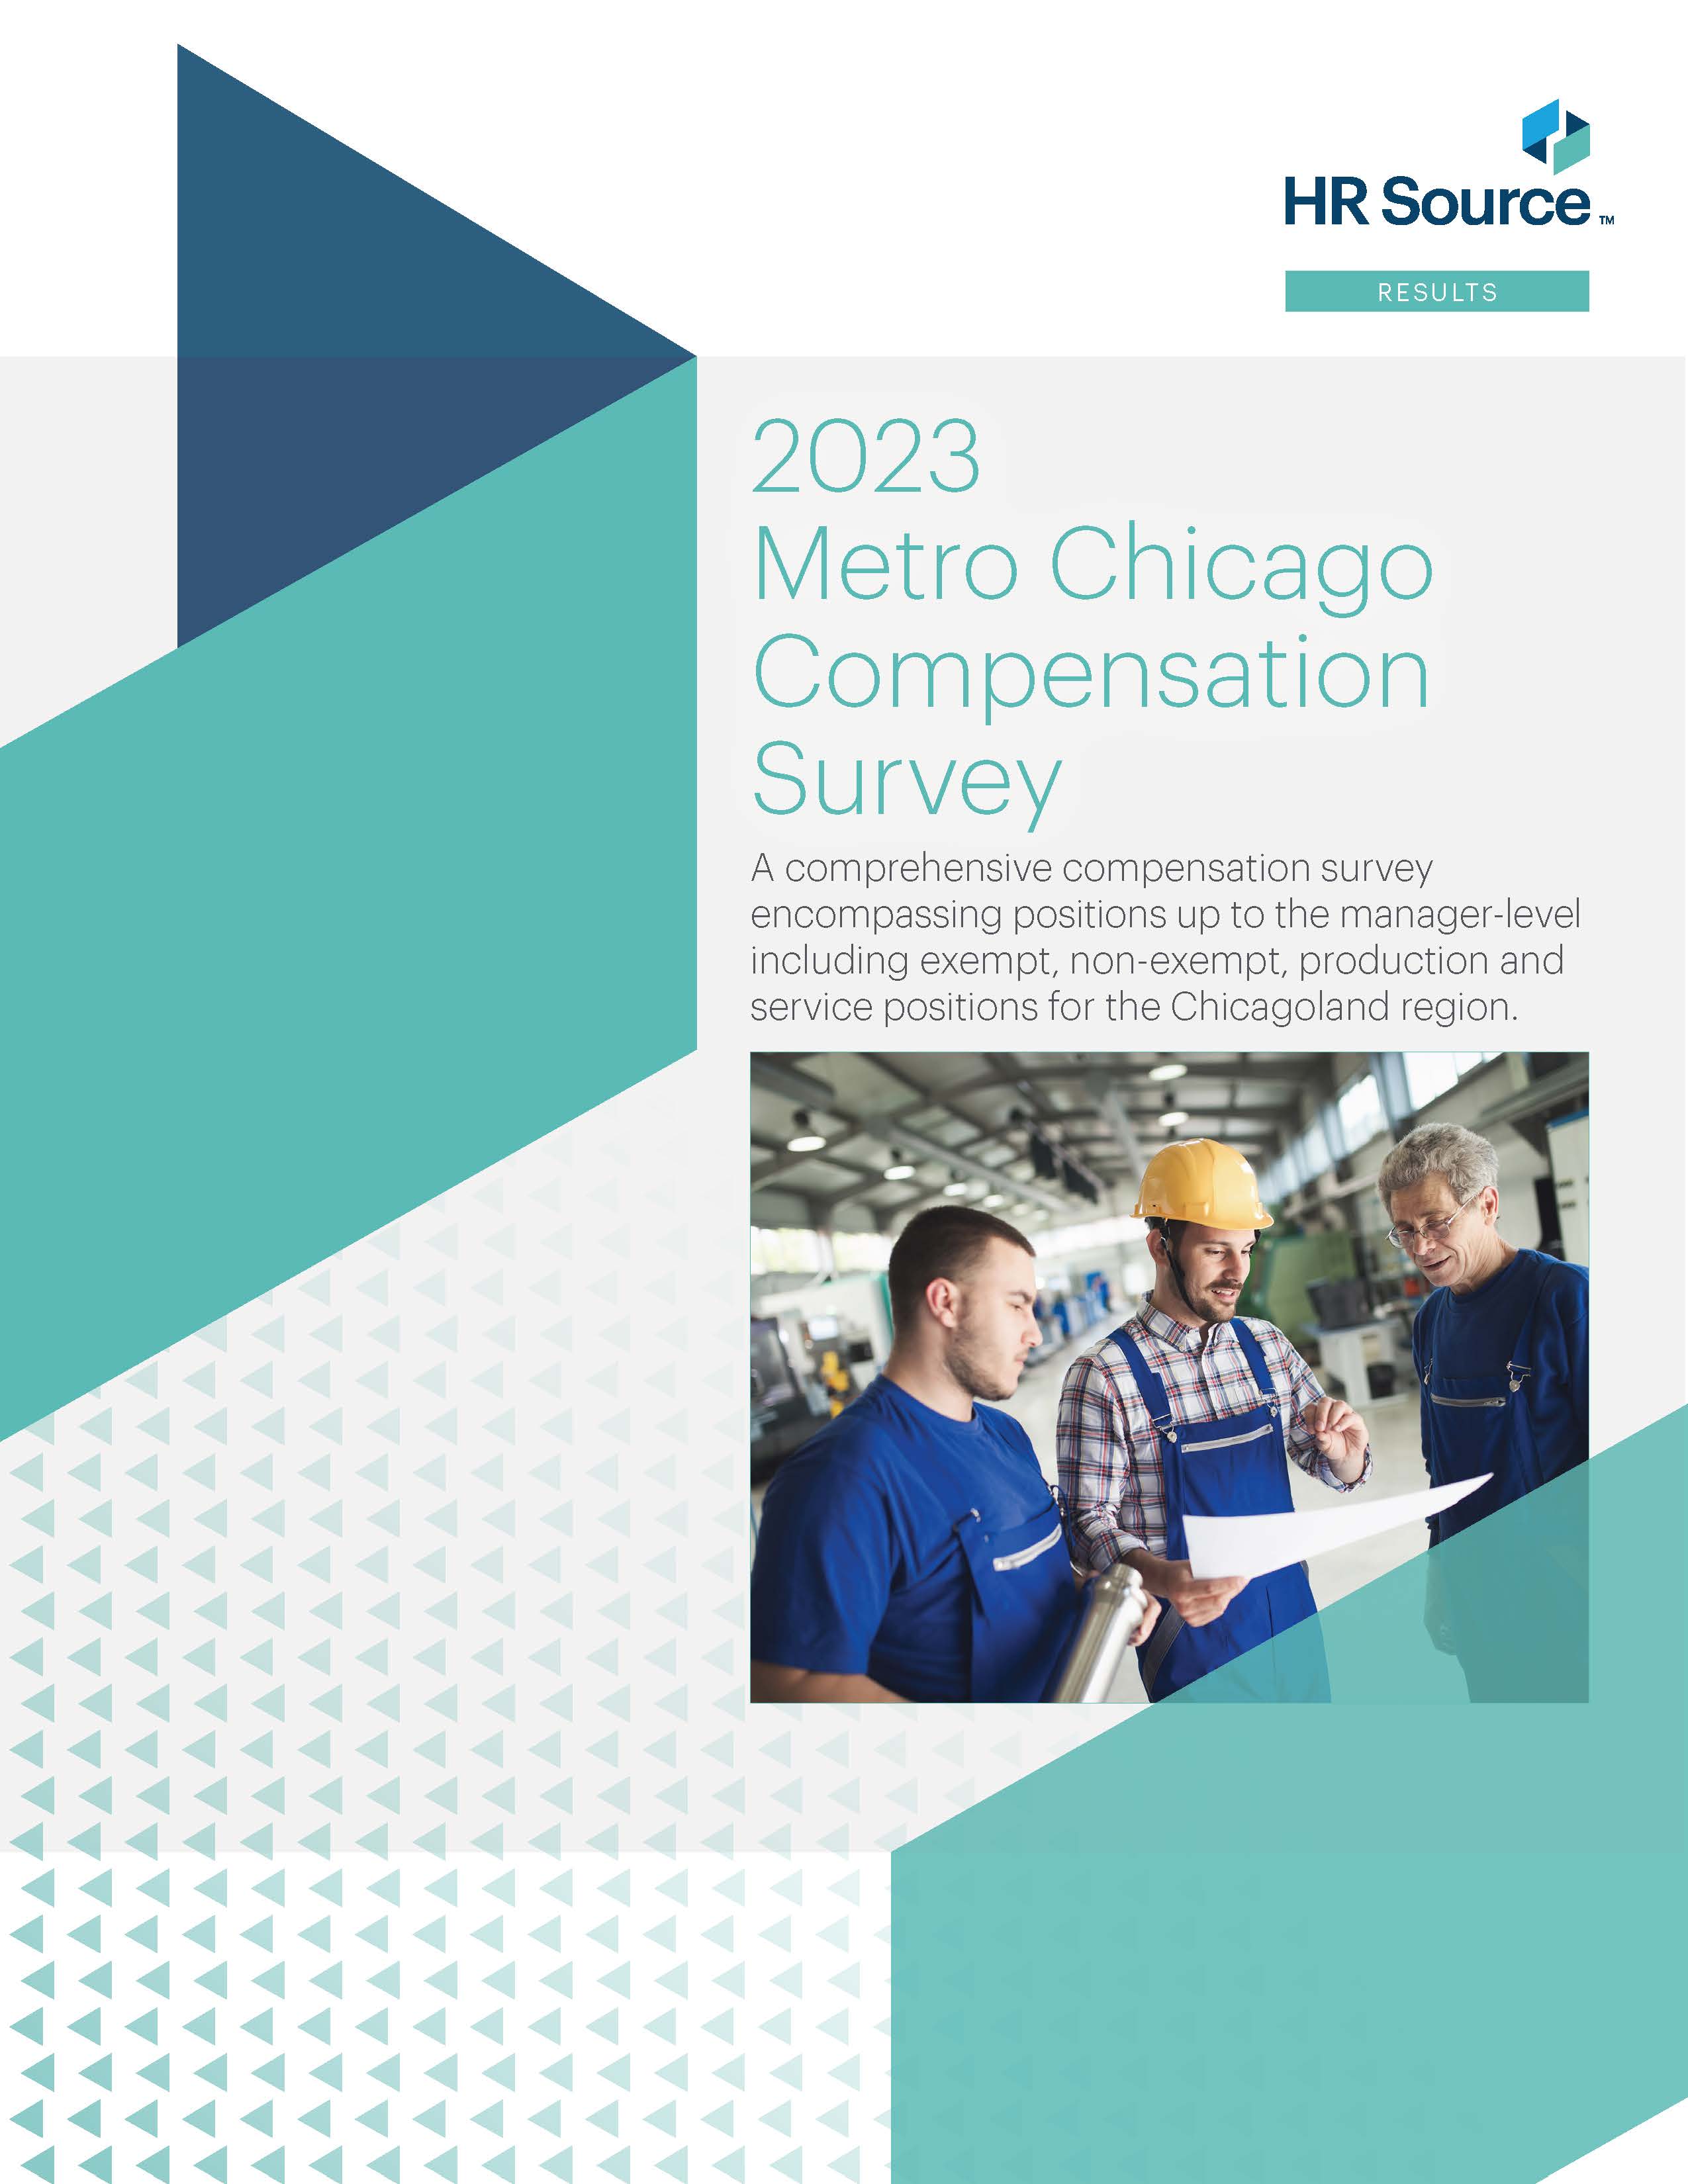 Metro Chicago Compensation Survey 2023